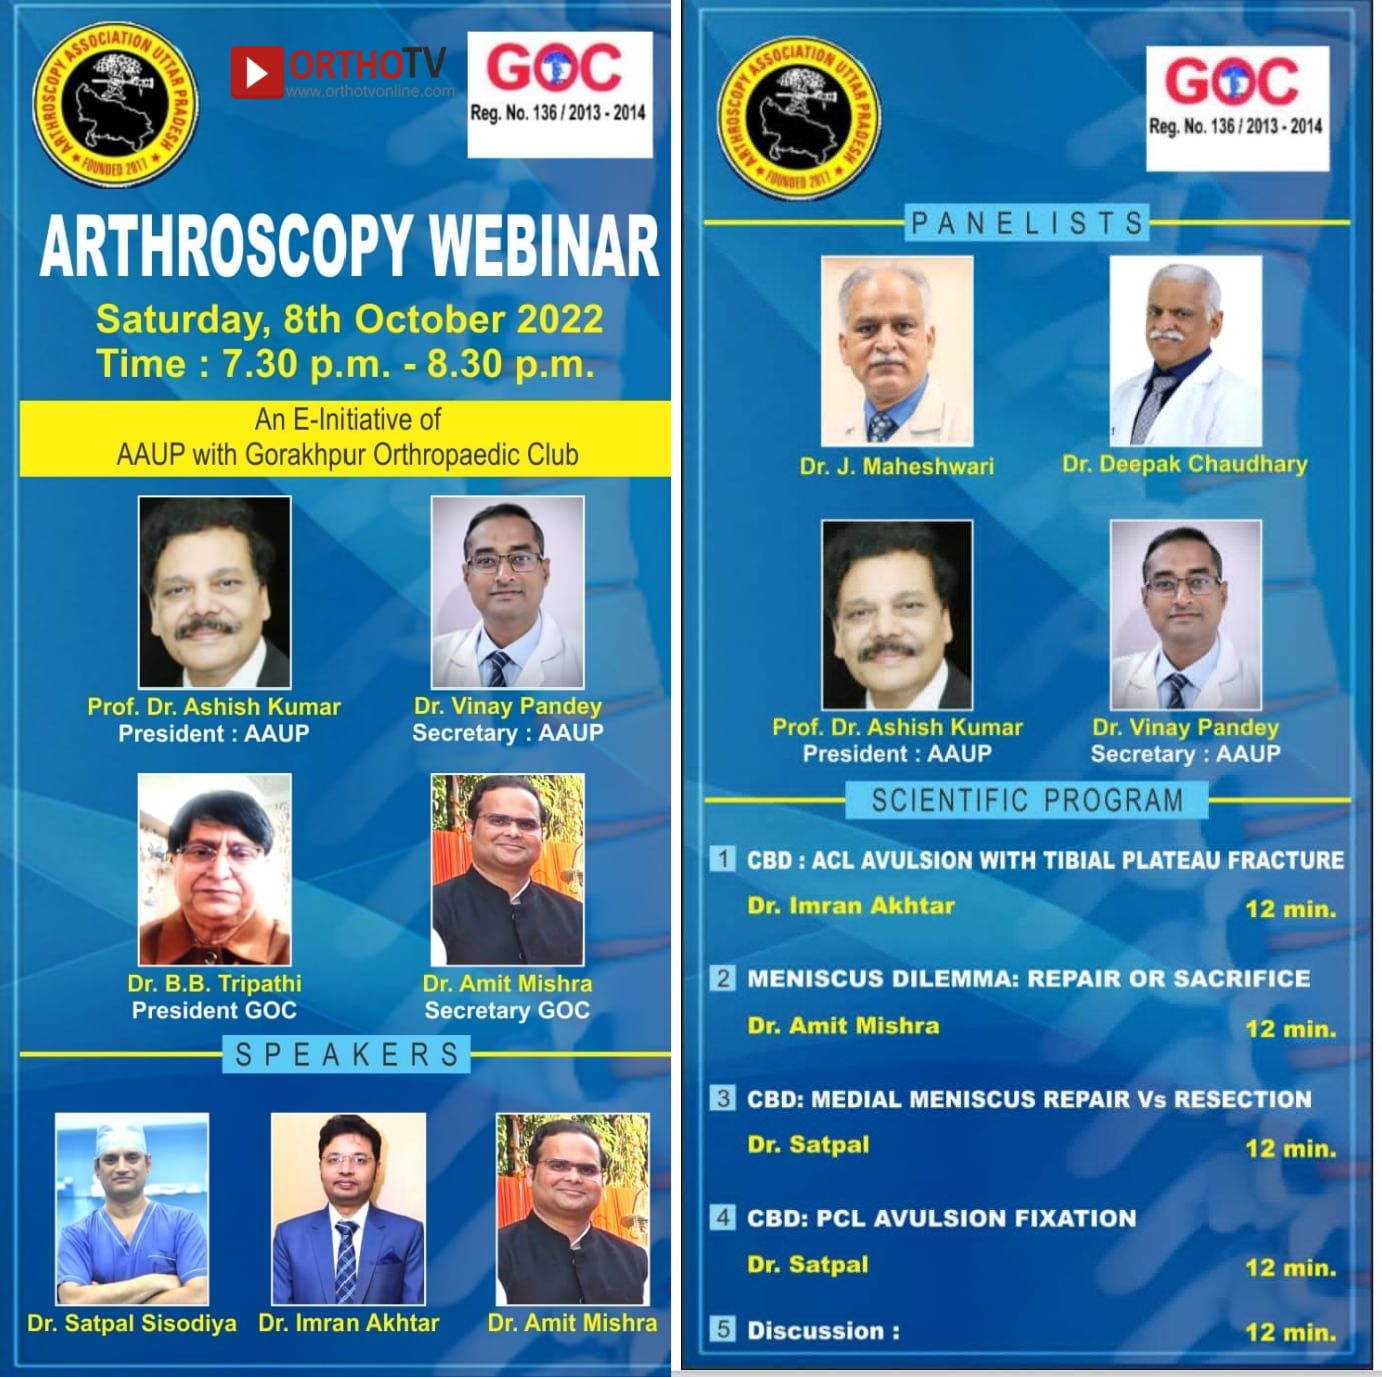 ARTHROSCOPY WEBINAR - An E-Initiative of AAUP with Gorakhpur Orthropaedic Club